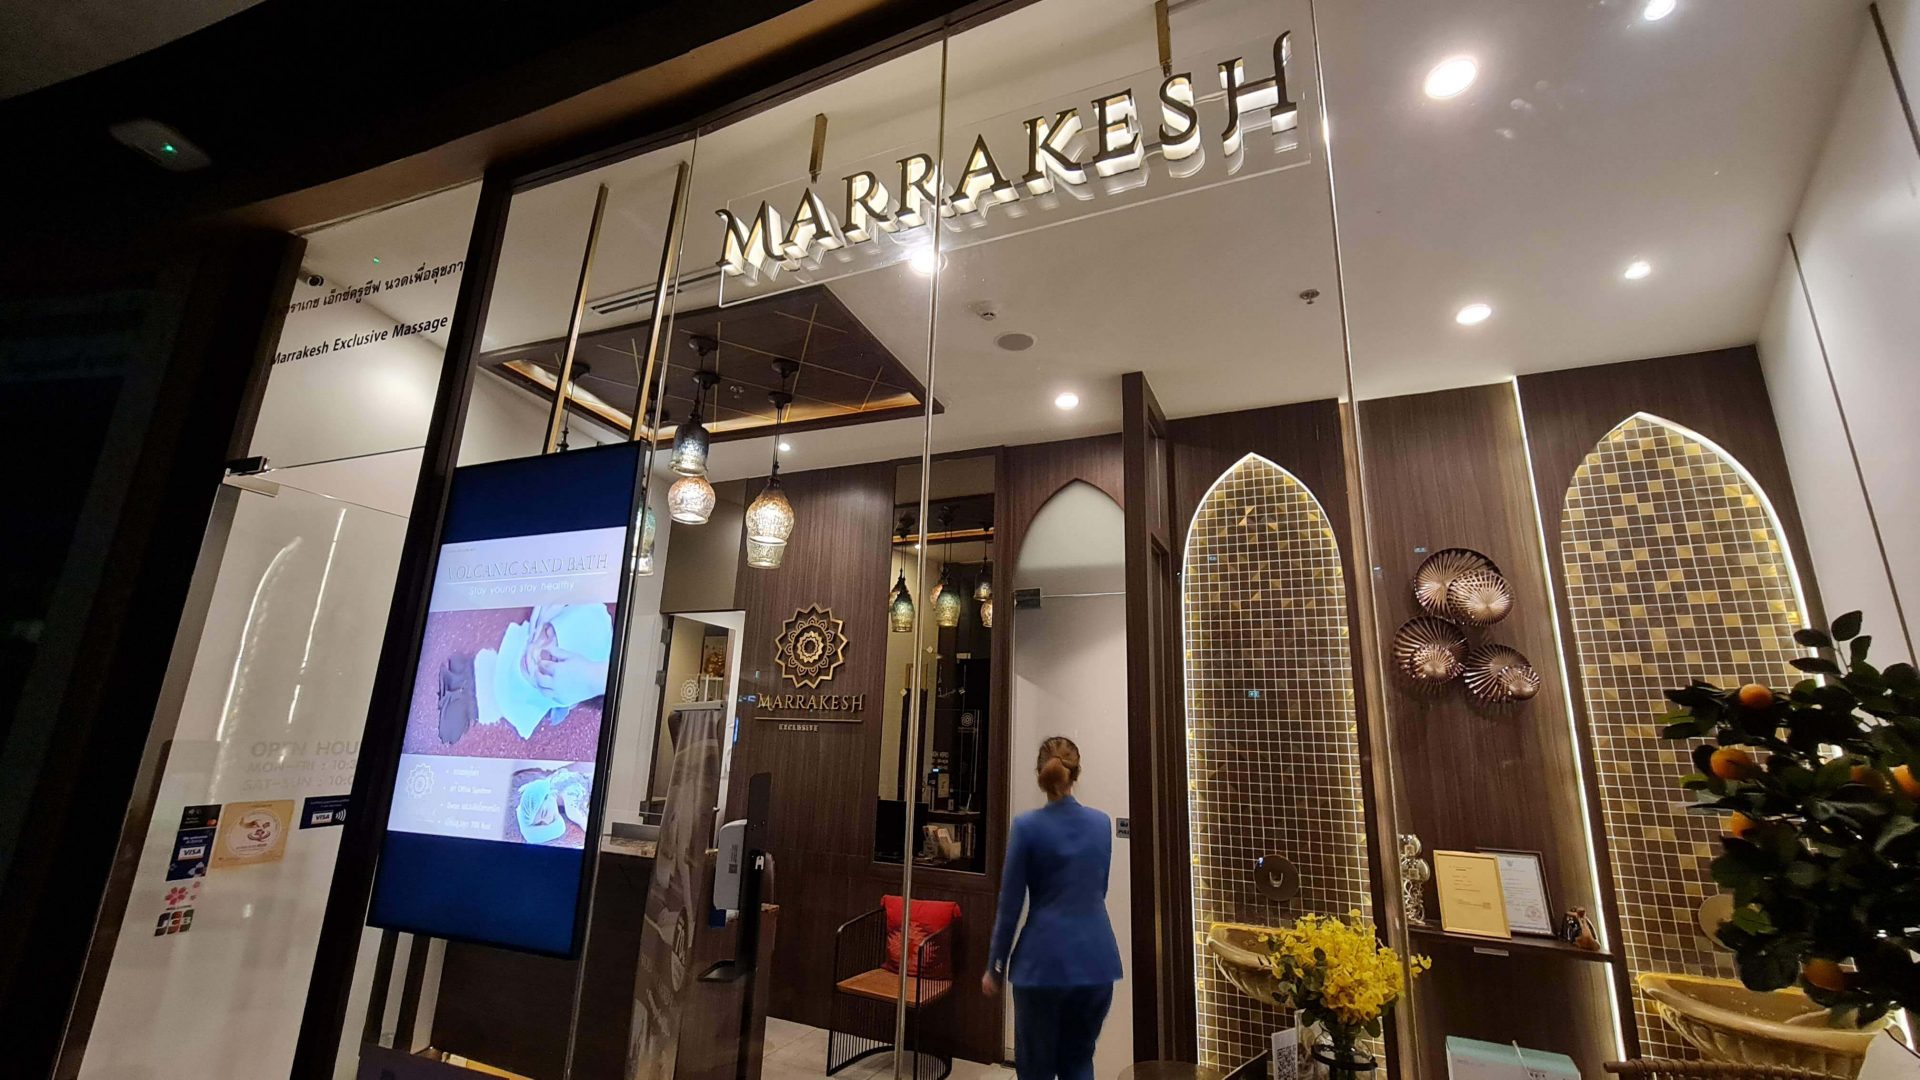 Marrakesh ร้านนวดเพื่อสุขภาพ Digital Signage (7)